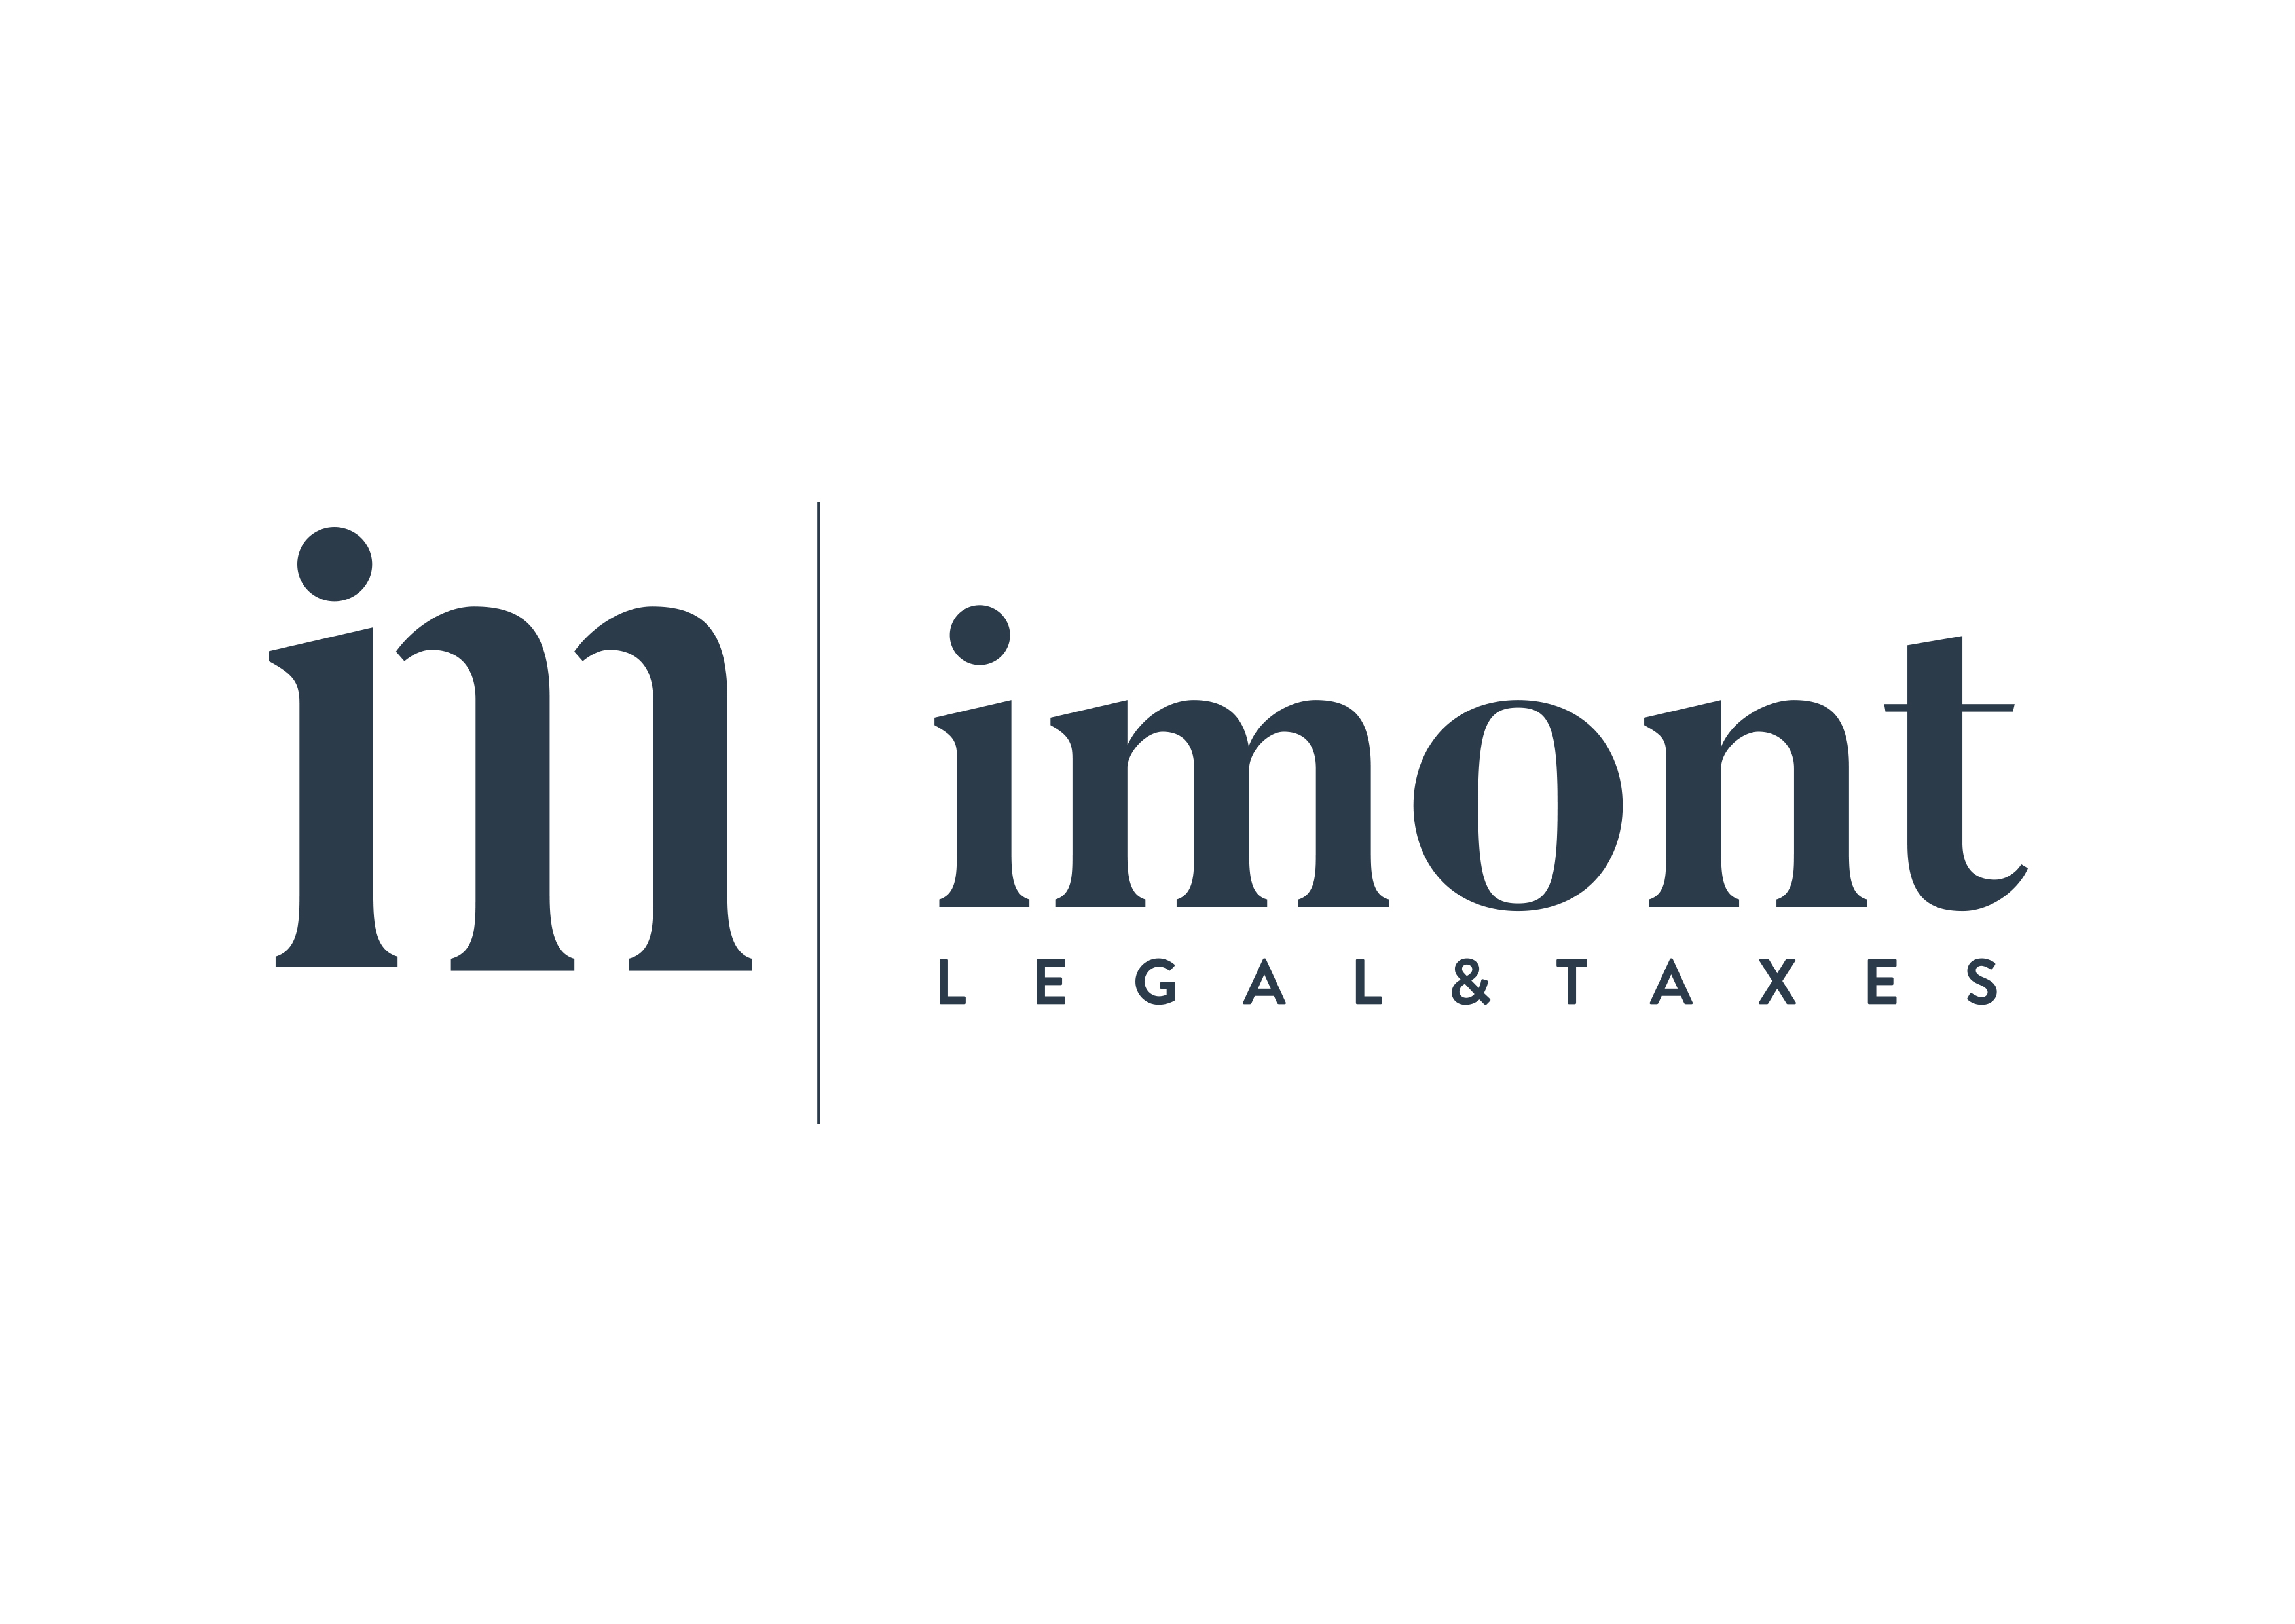 IMONT Legal Services